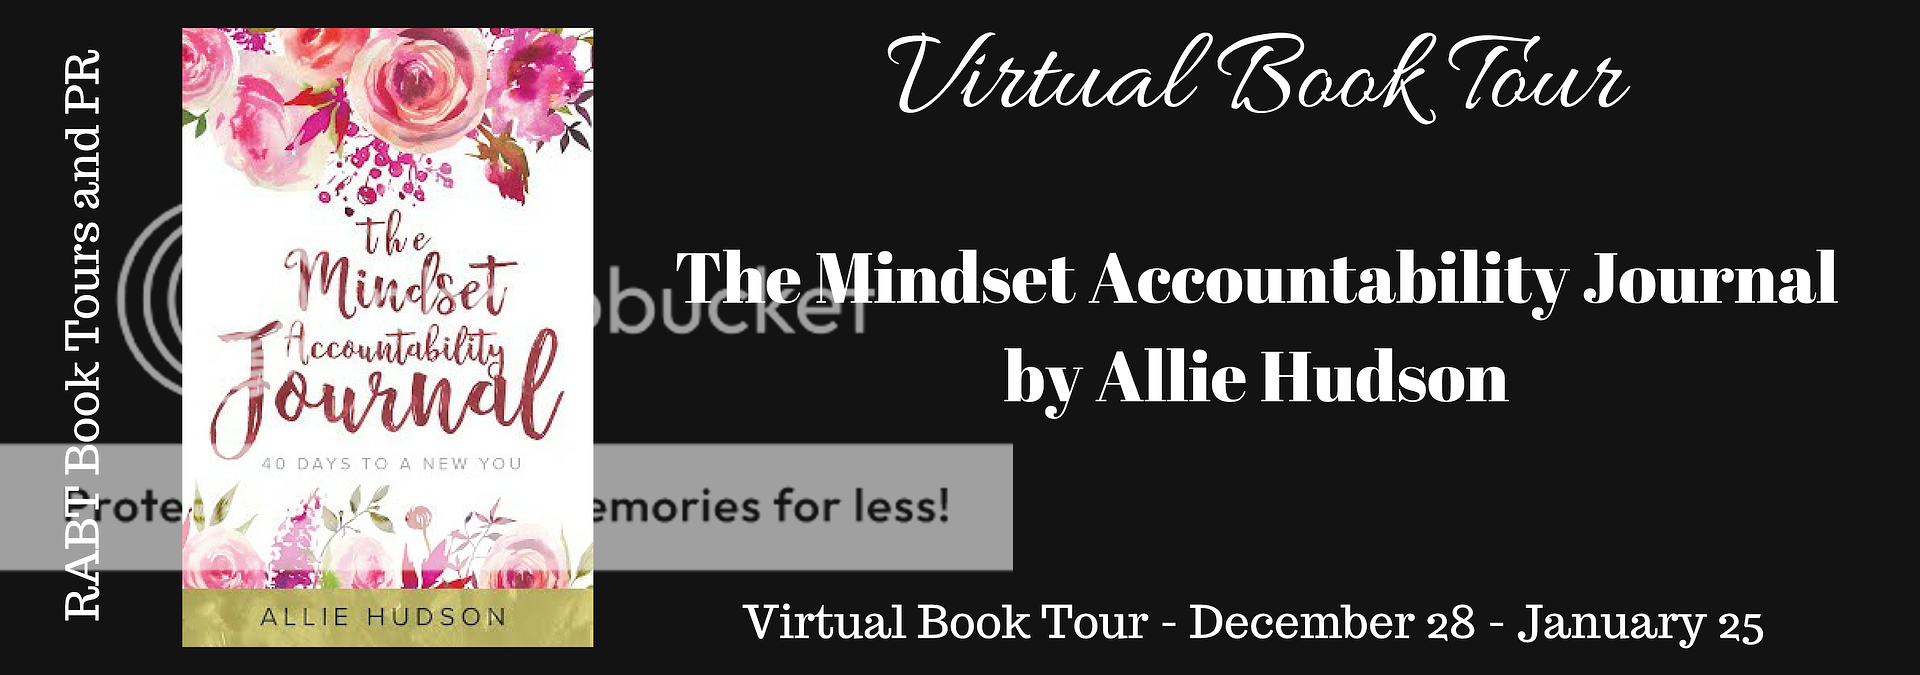 Virtual Book Tour: The Mindset Accountability Journal by Allie Hudson @livinglifebeyo1 #interview #selfhelp #nonfiction @RABTBookTours